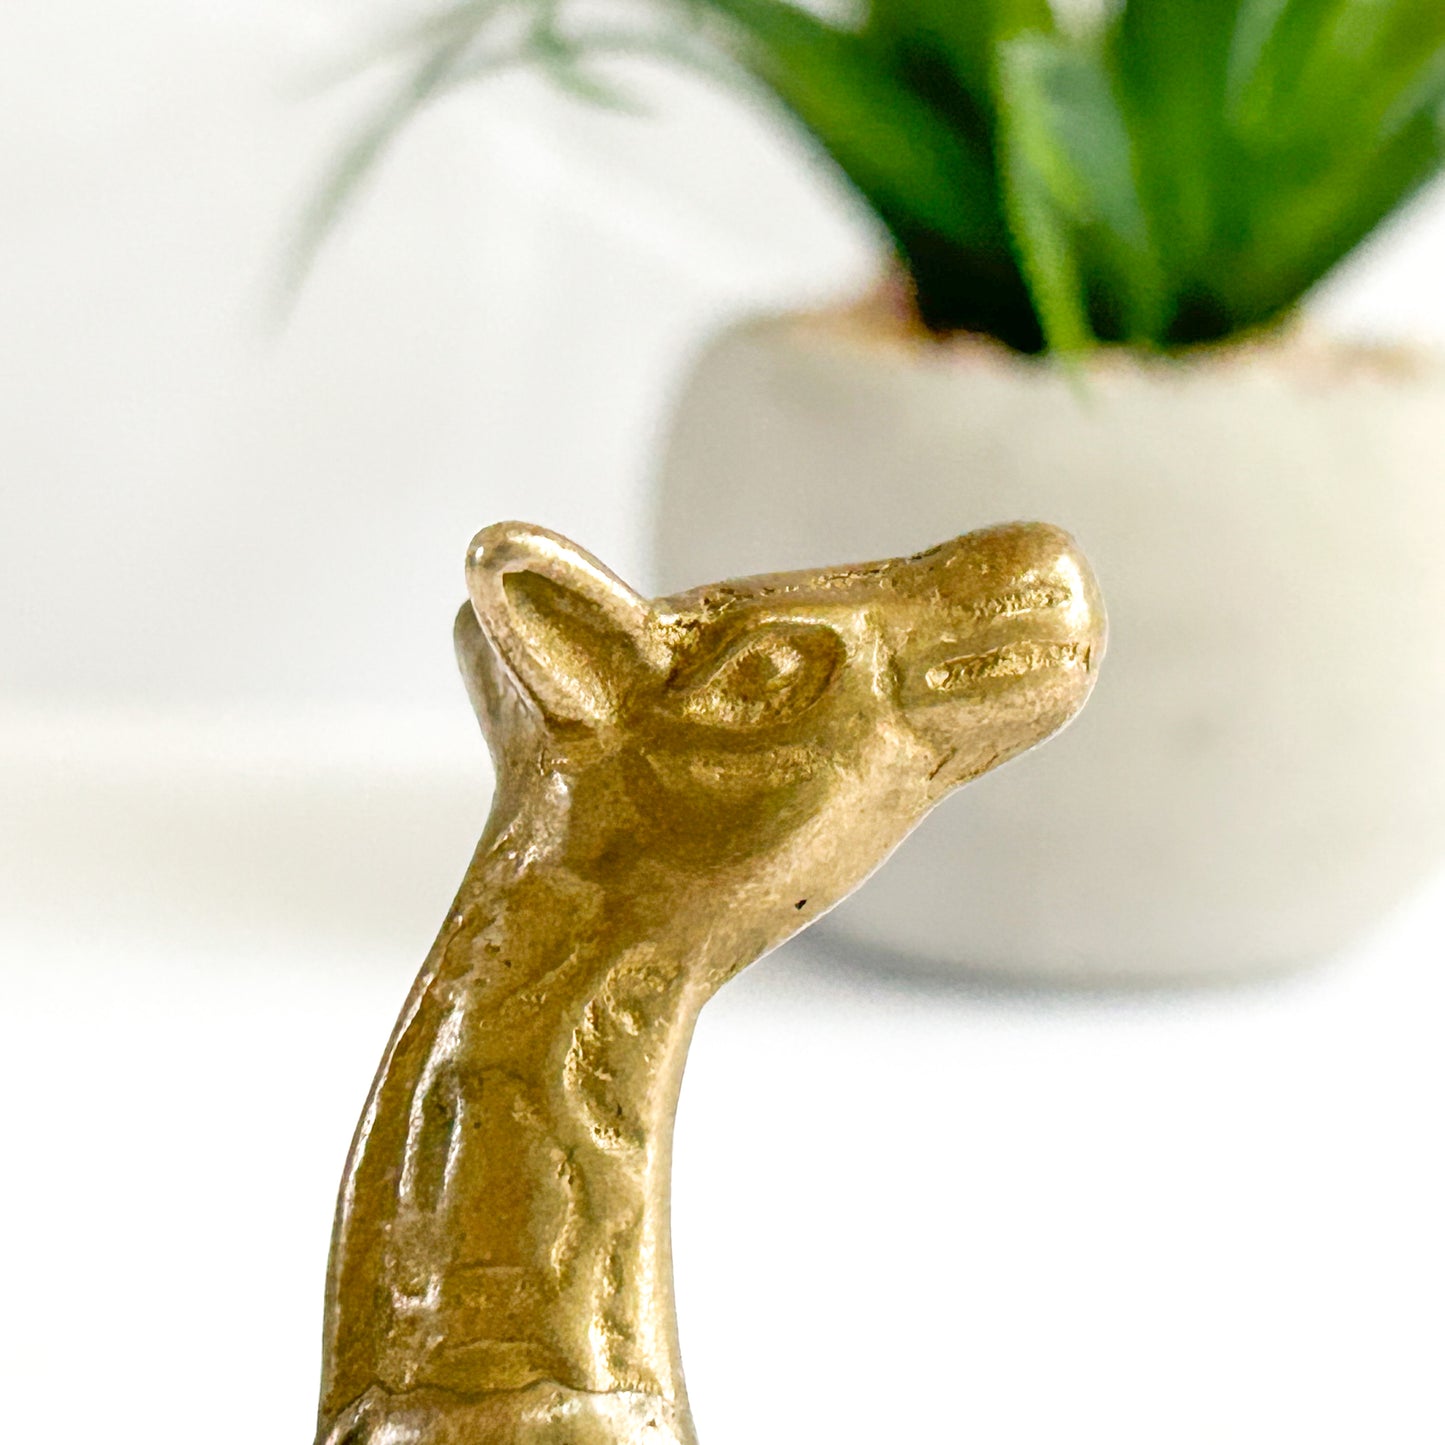 Small vintage brass giraffe figurine